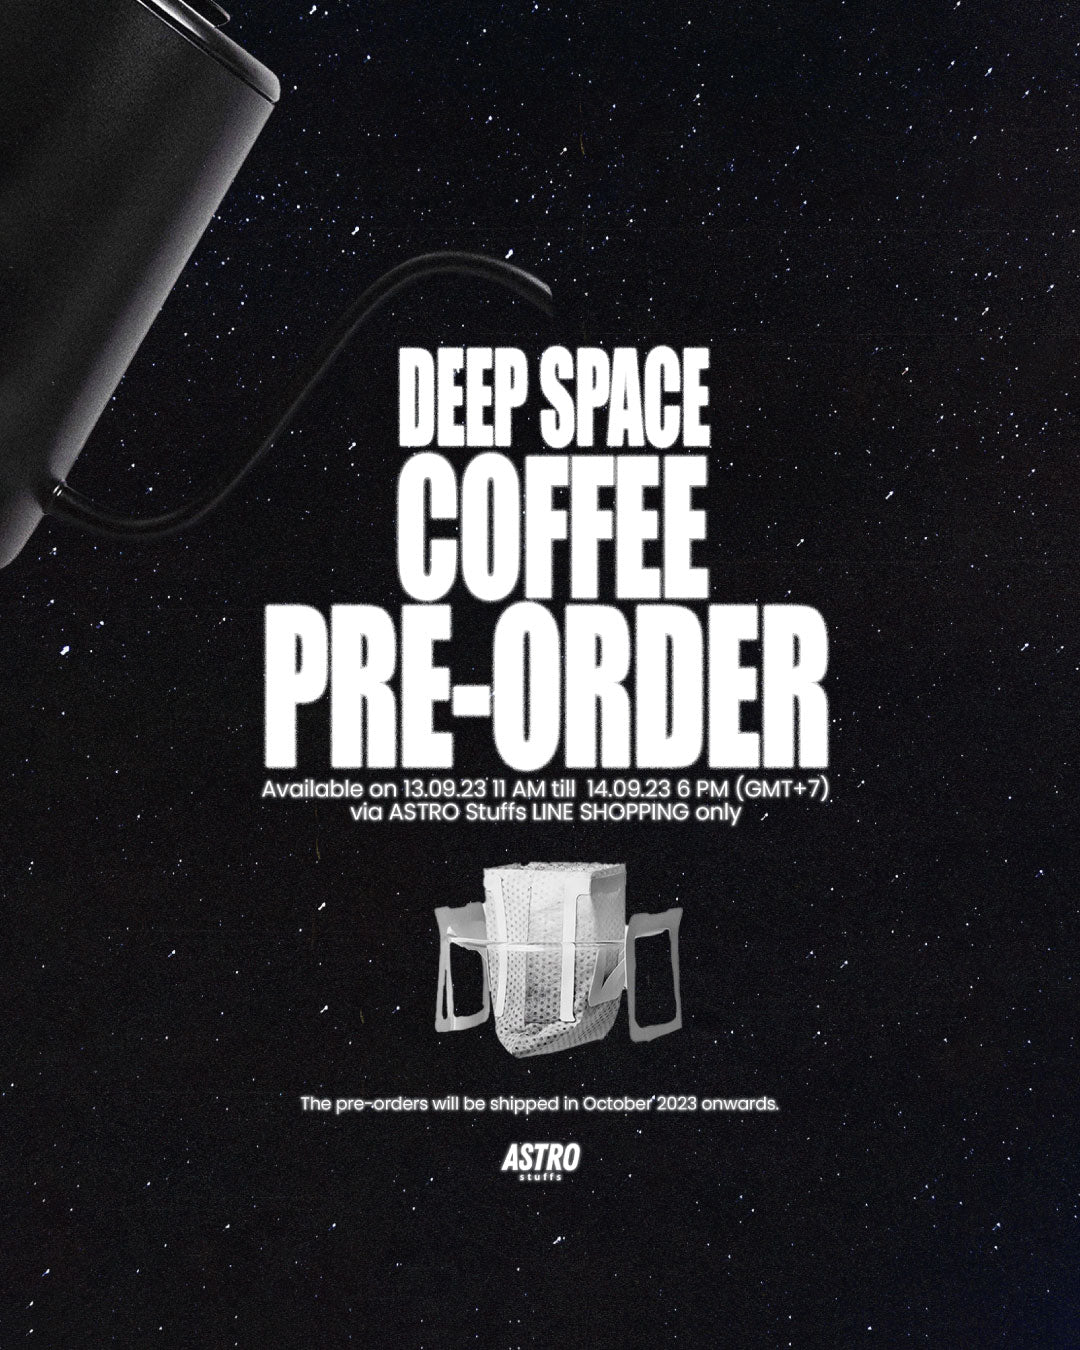 bright ASTRO Stuffs DEEP SPACE COFFEE